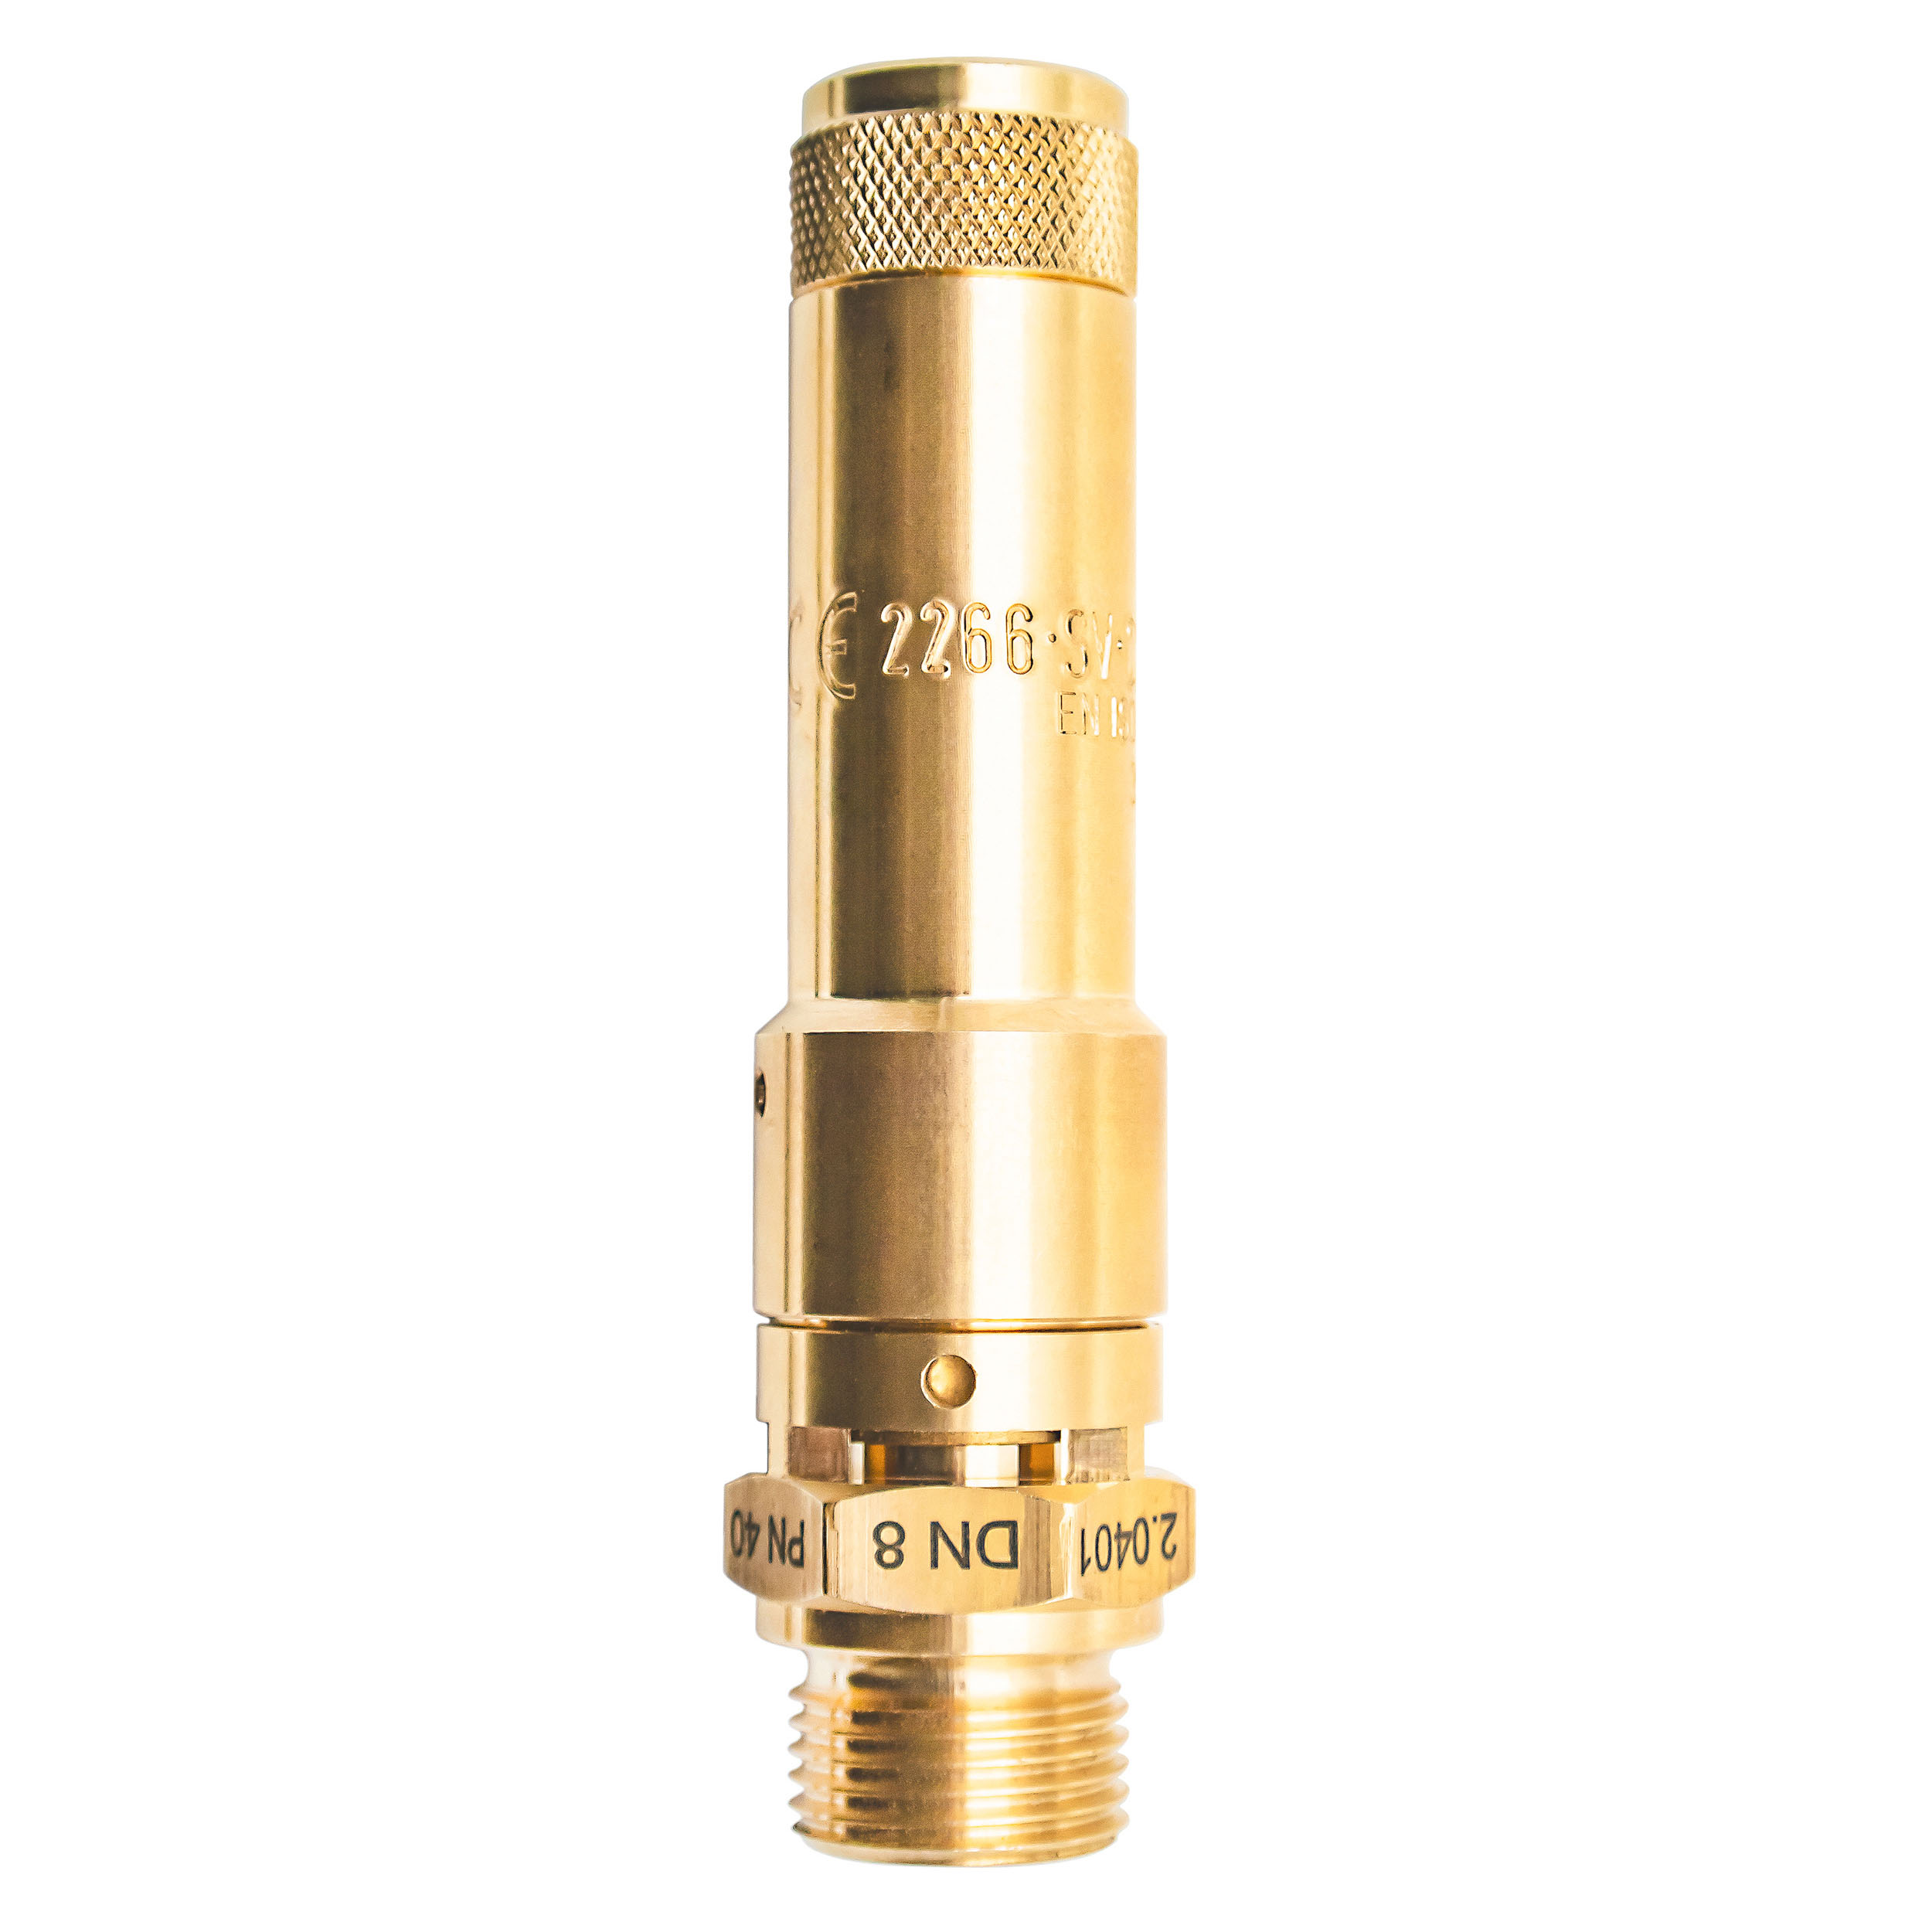 Component-tested safety valve DN 8, G⅜, pressure: 5.1-7 bar